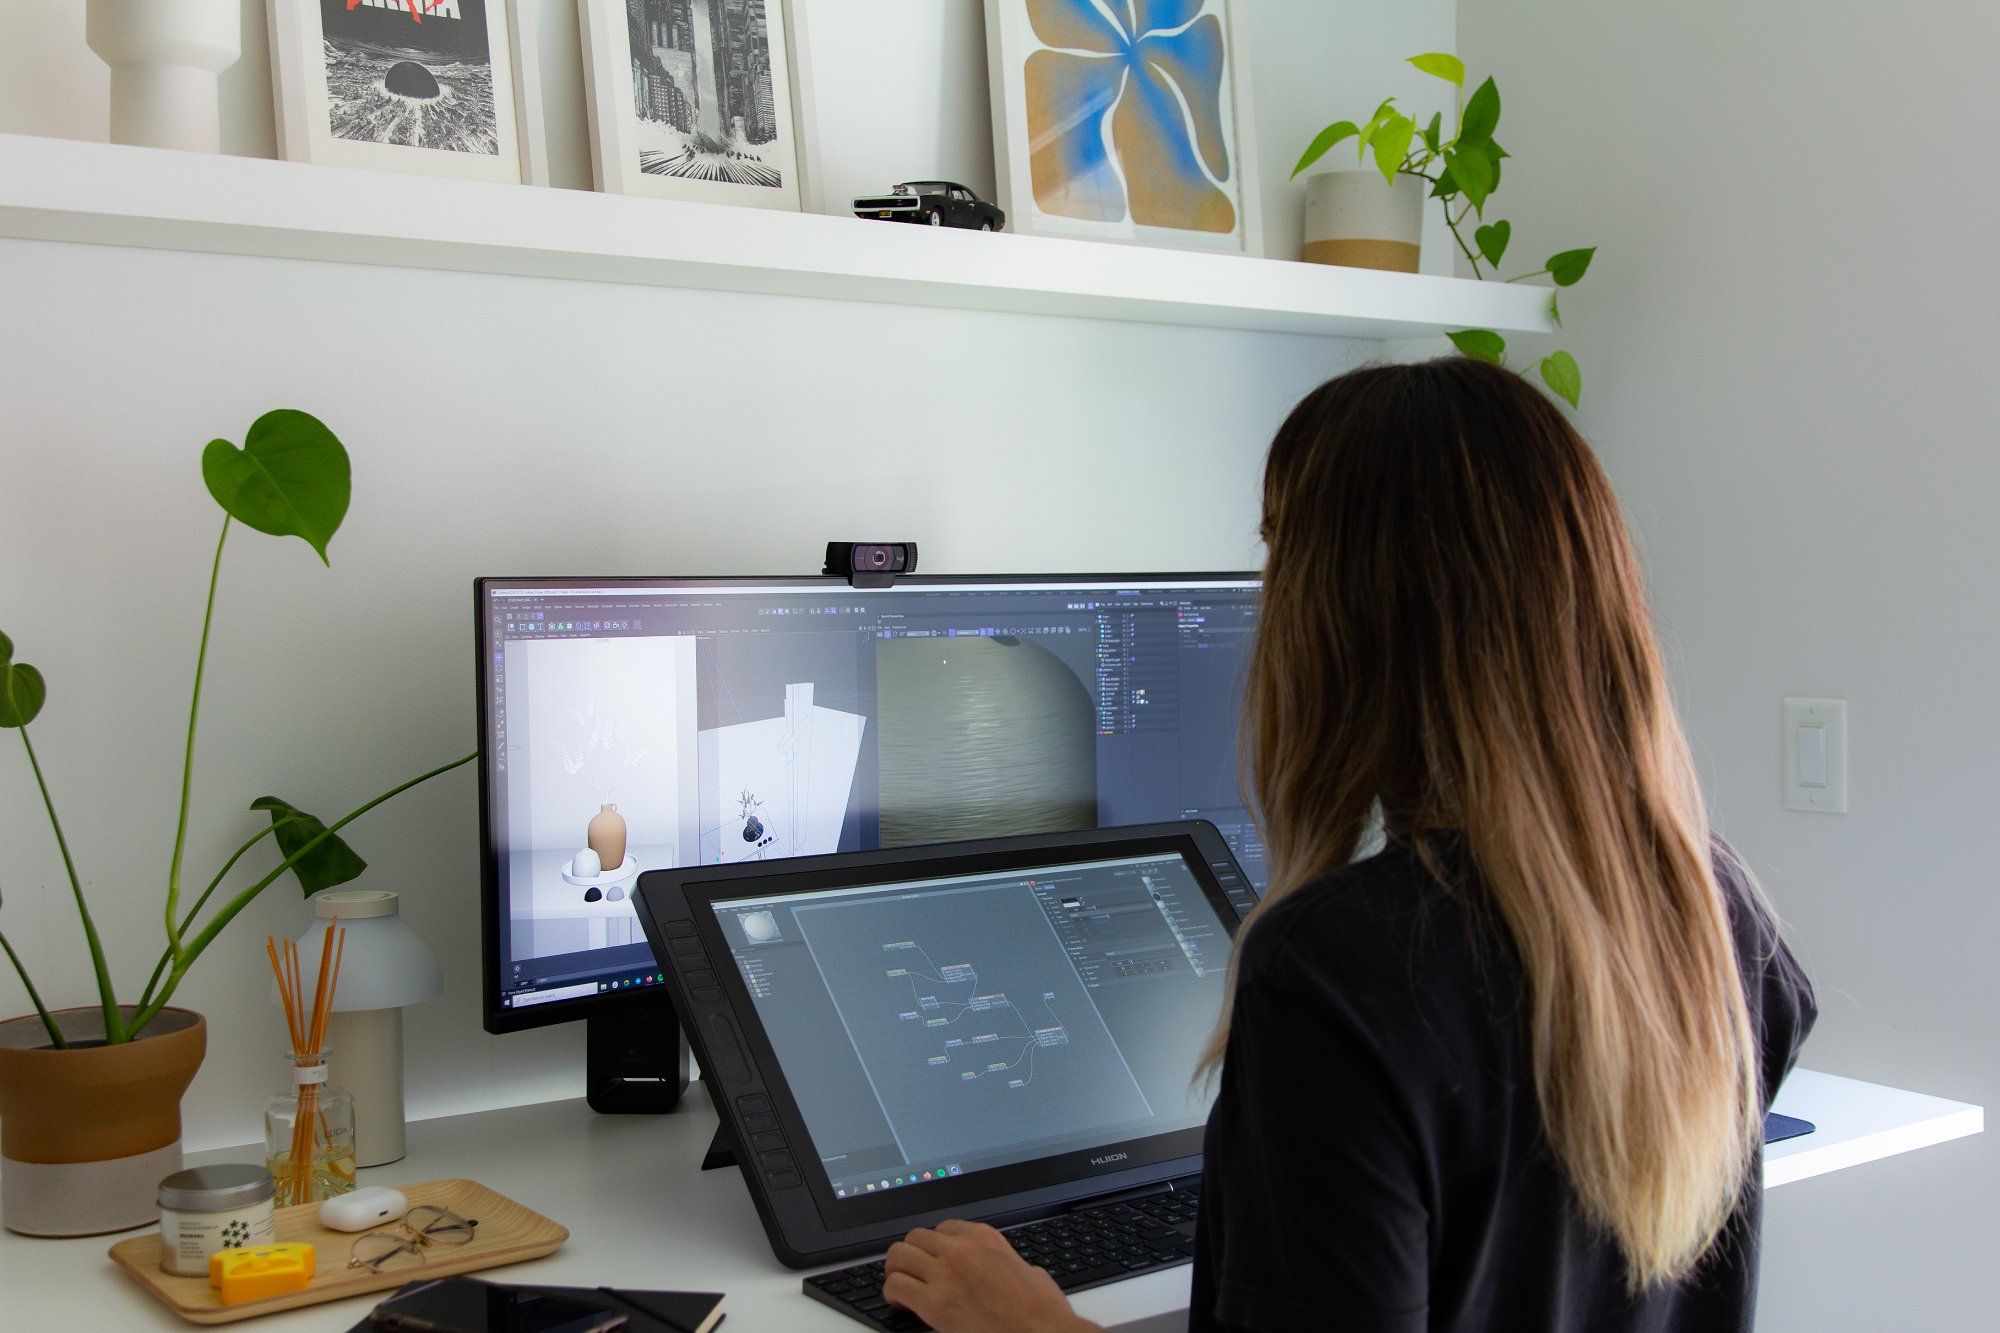 Jantana Hennard, a 3D designer, at her ergonomic home workspace in Canada